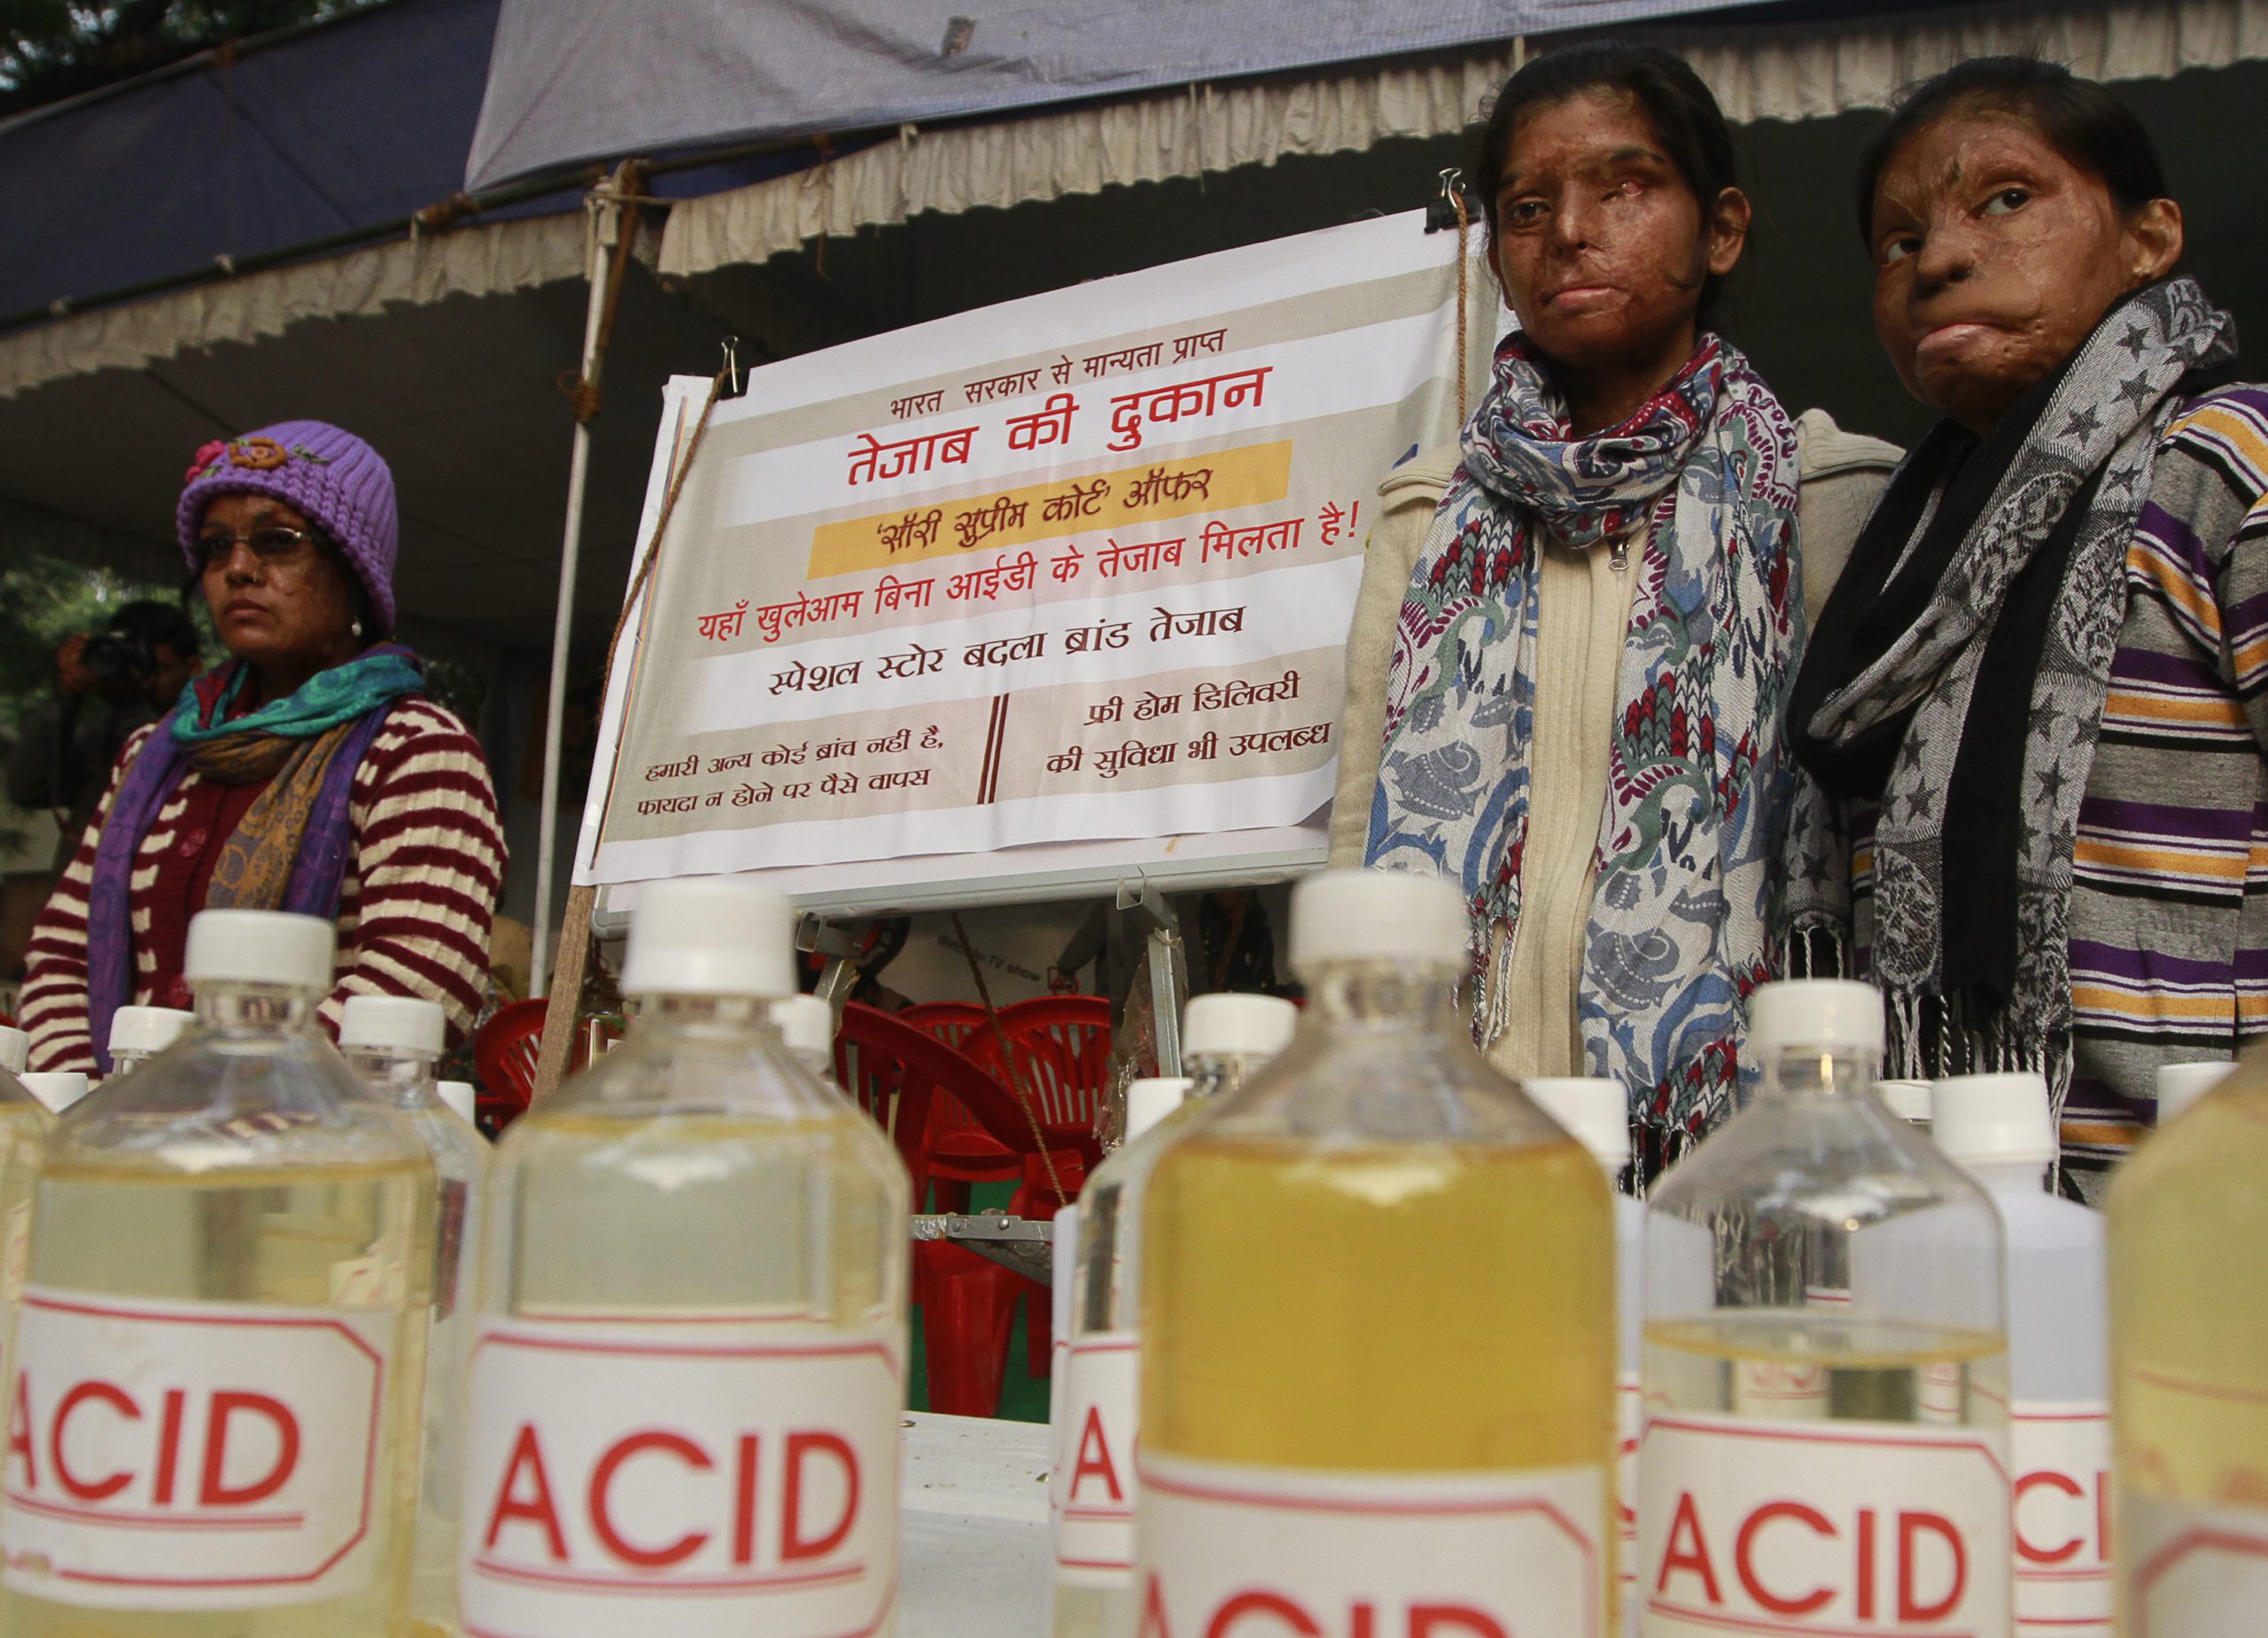 Acid Attacks: No change on ground; crisis deepens